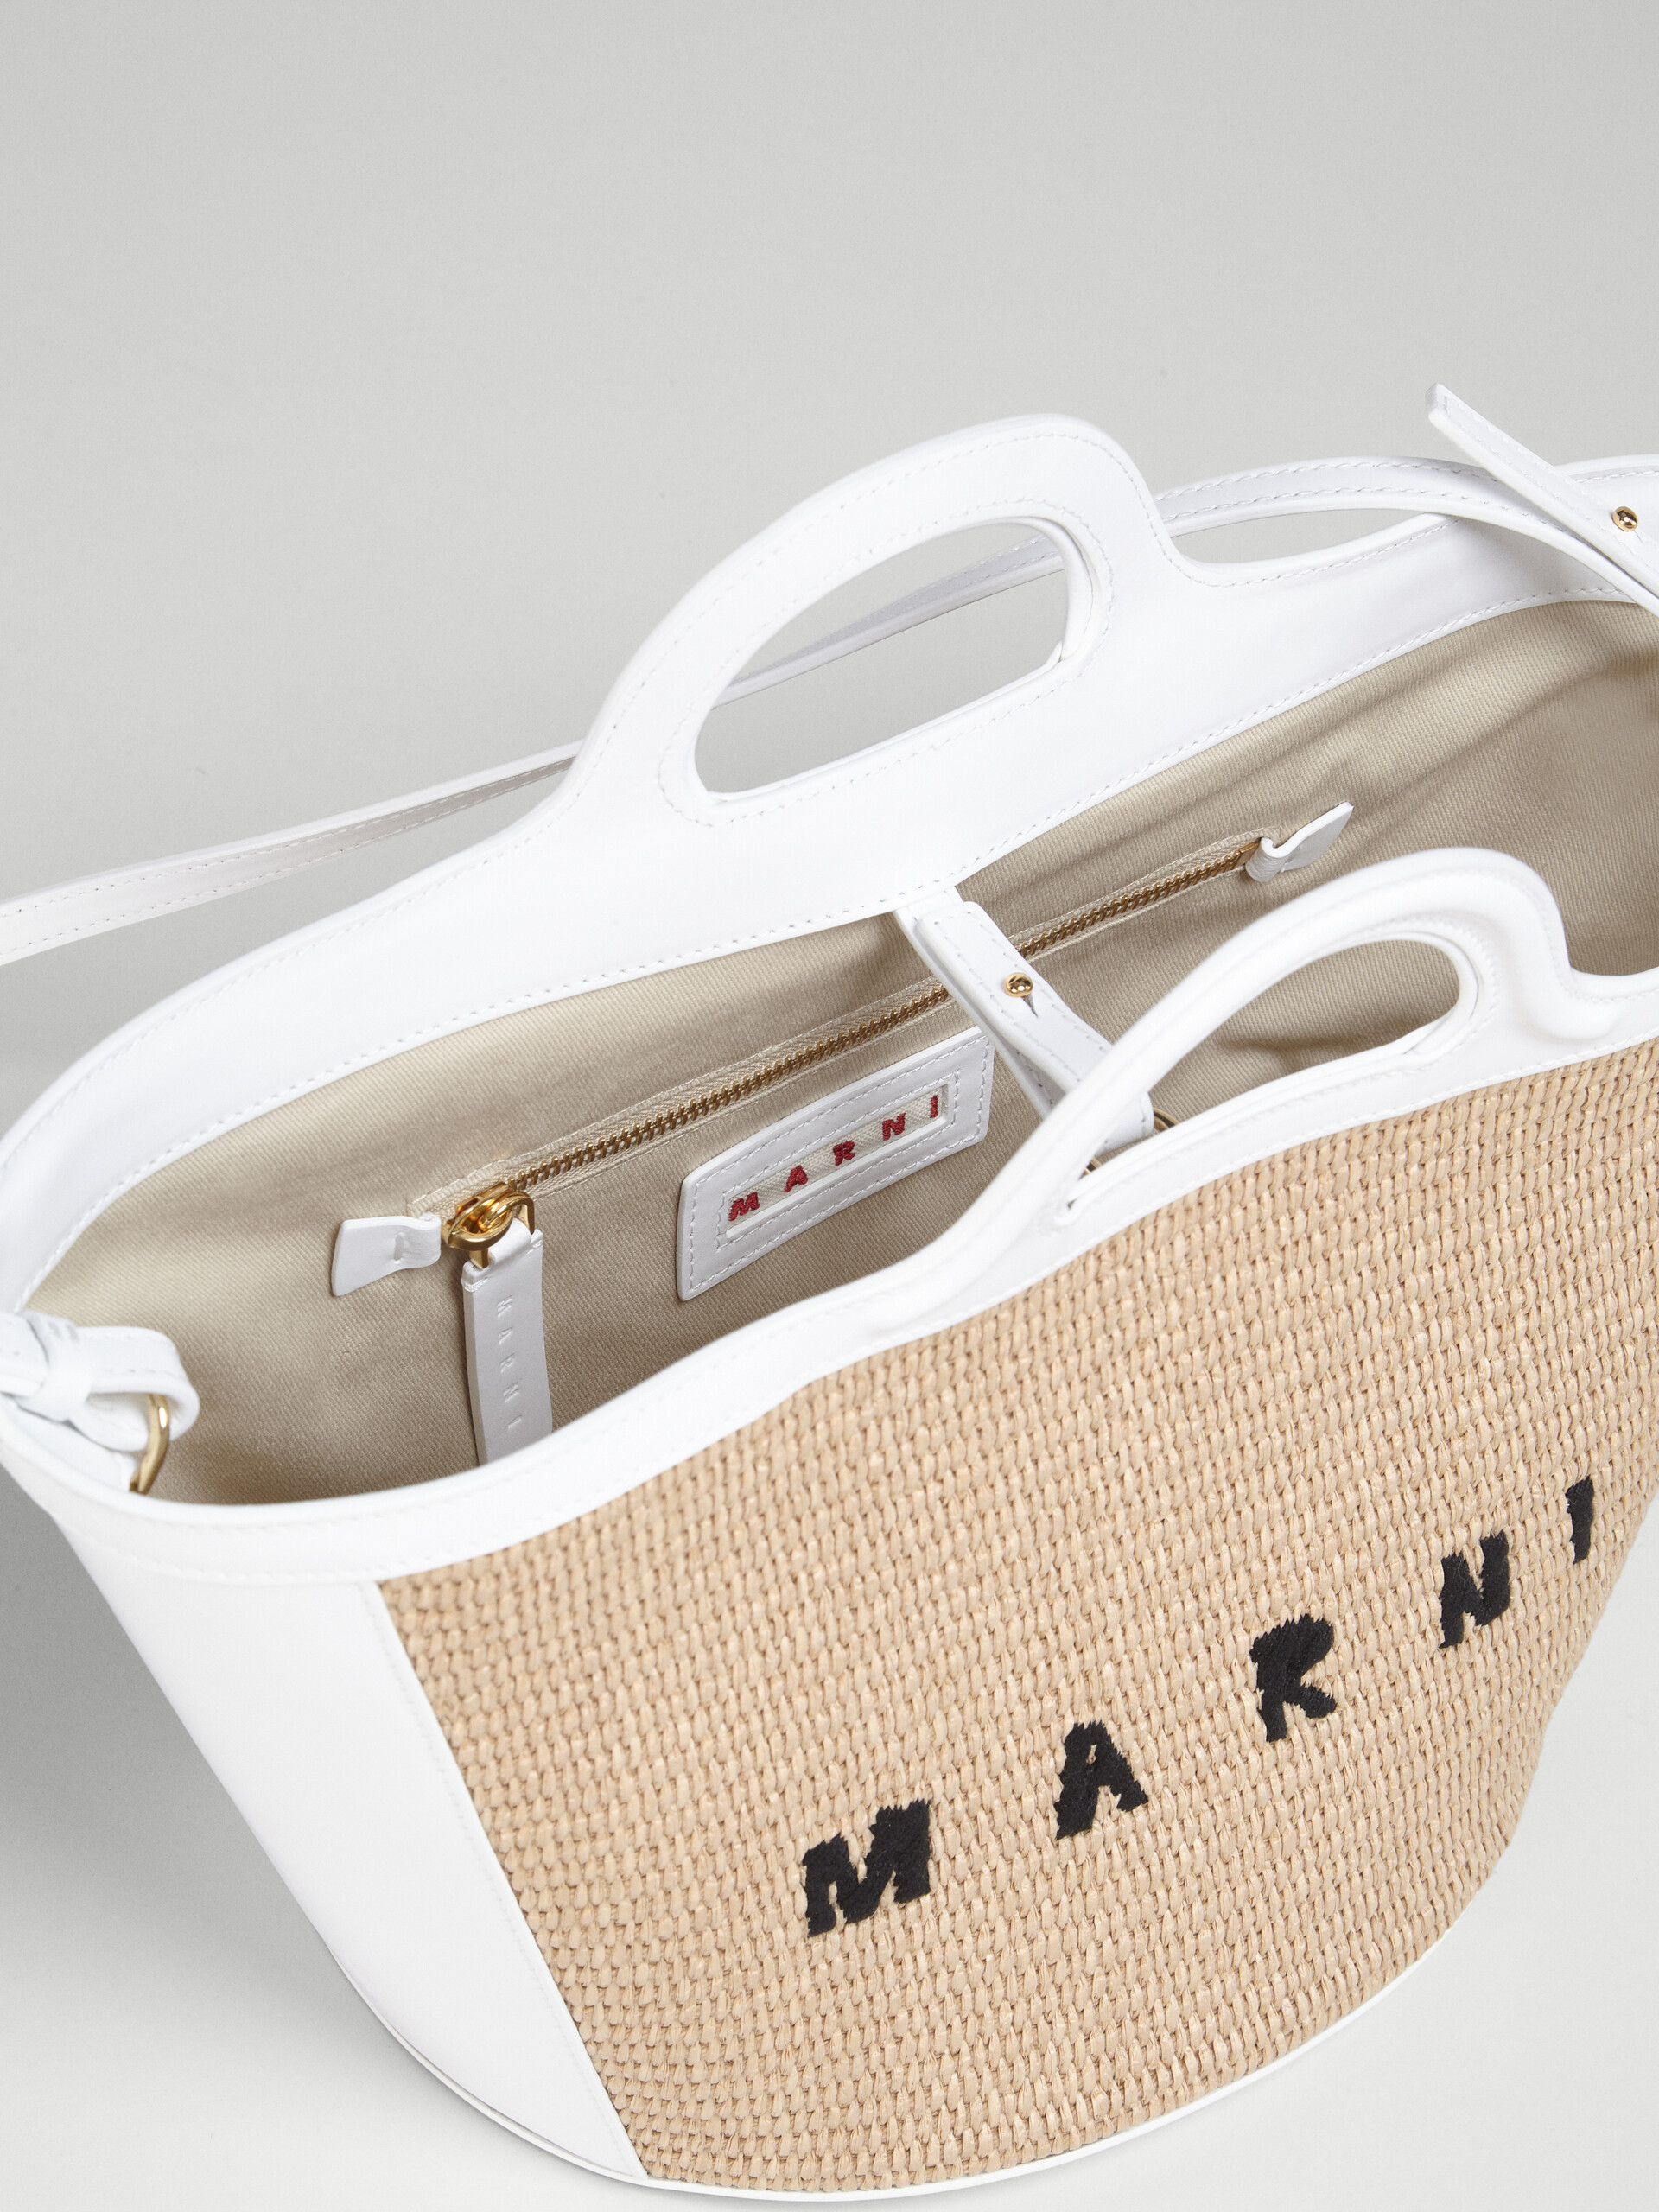 Tropicalia Small Bag in white leather and raffia - Handbag - Image 5